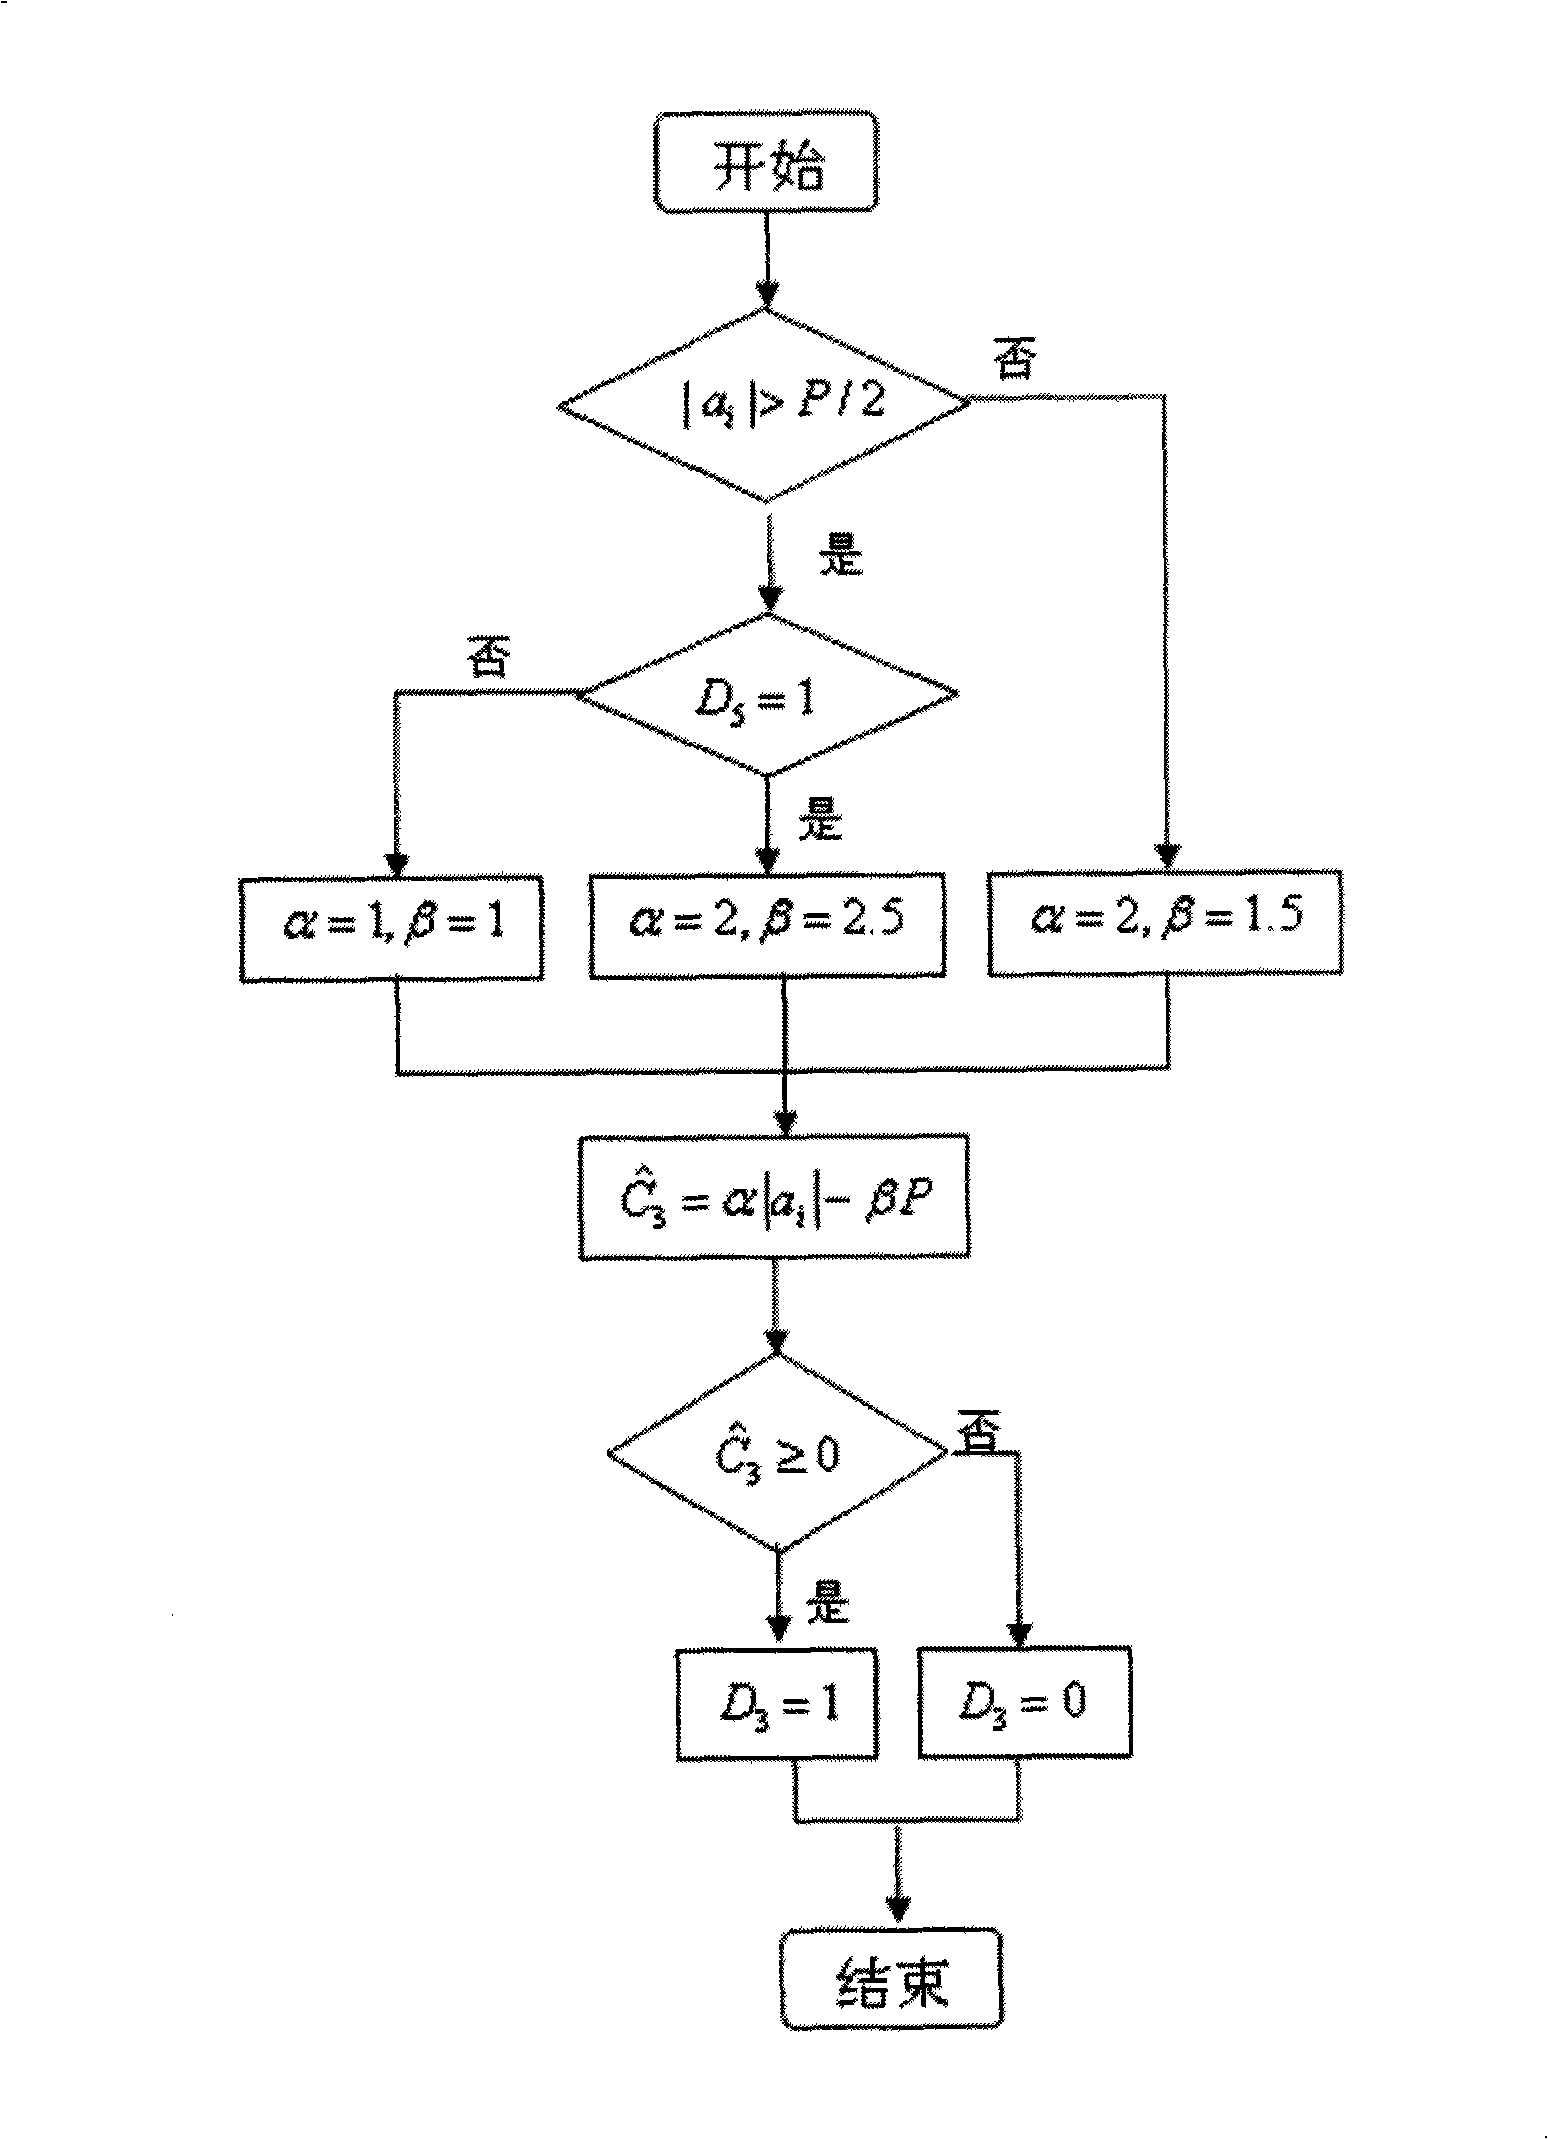 Fixed-point soft decision demodulation method of quadrature amplitude modulation technique